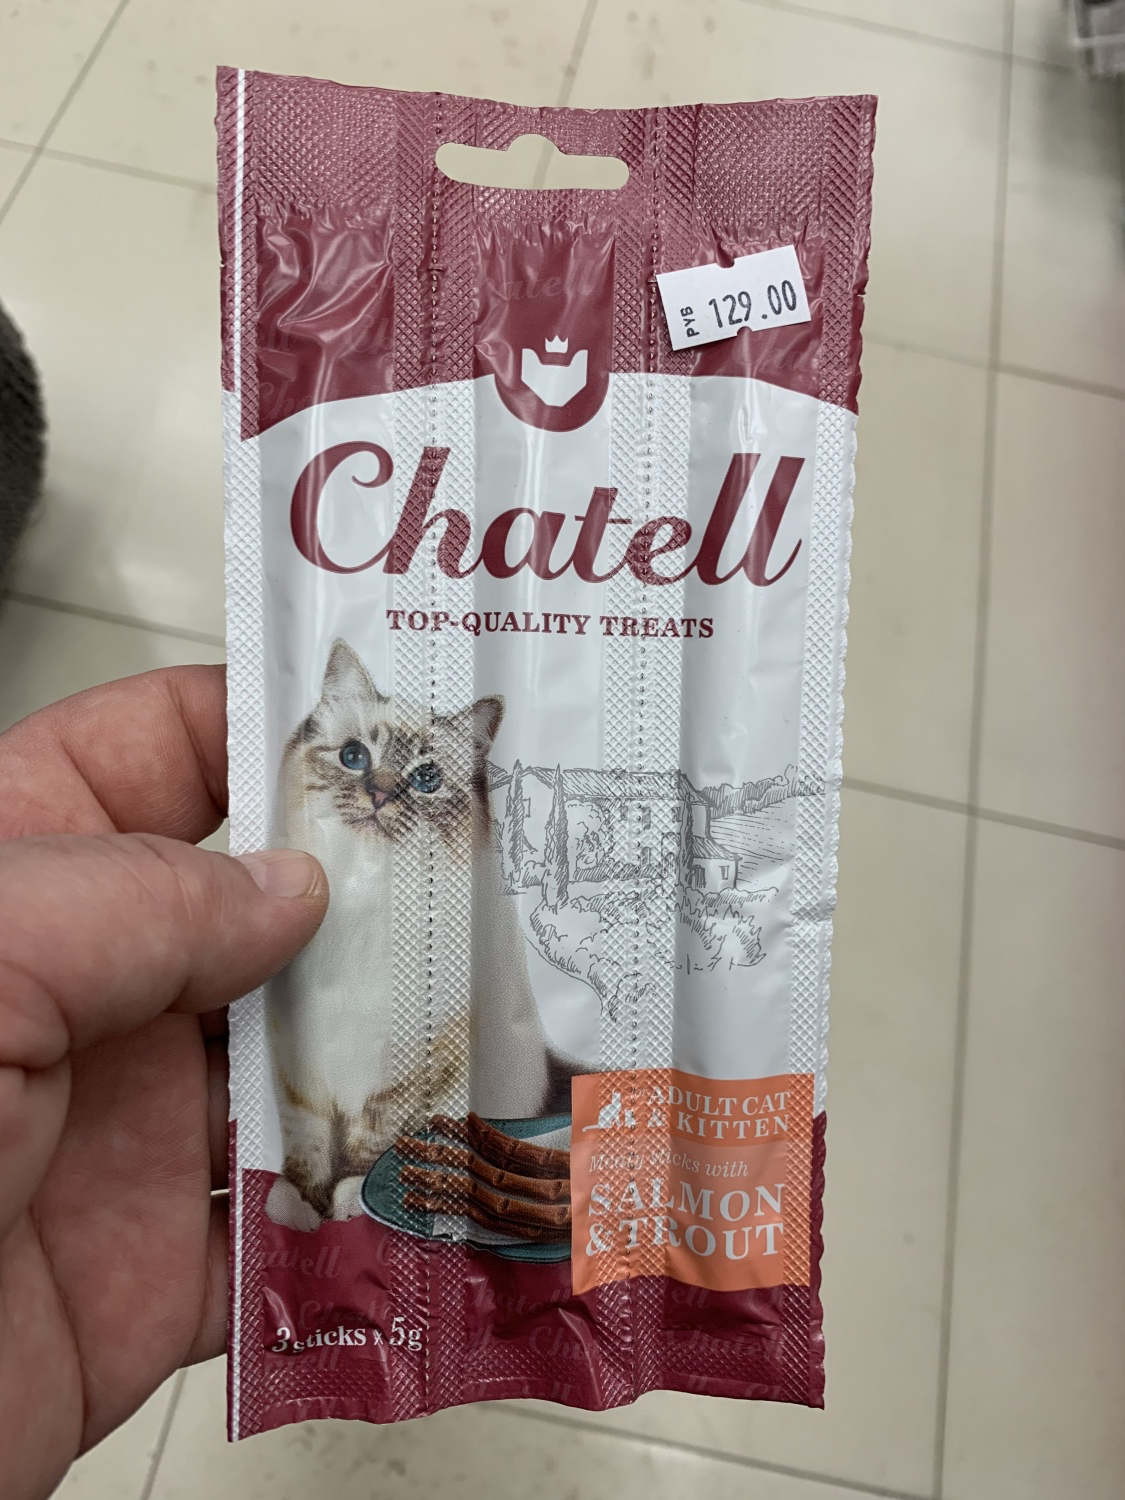 Лакомство для кошек Chatell Мясные колбаски " Chatell " Top-Quality Treats фото